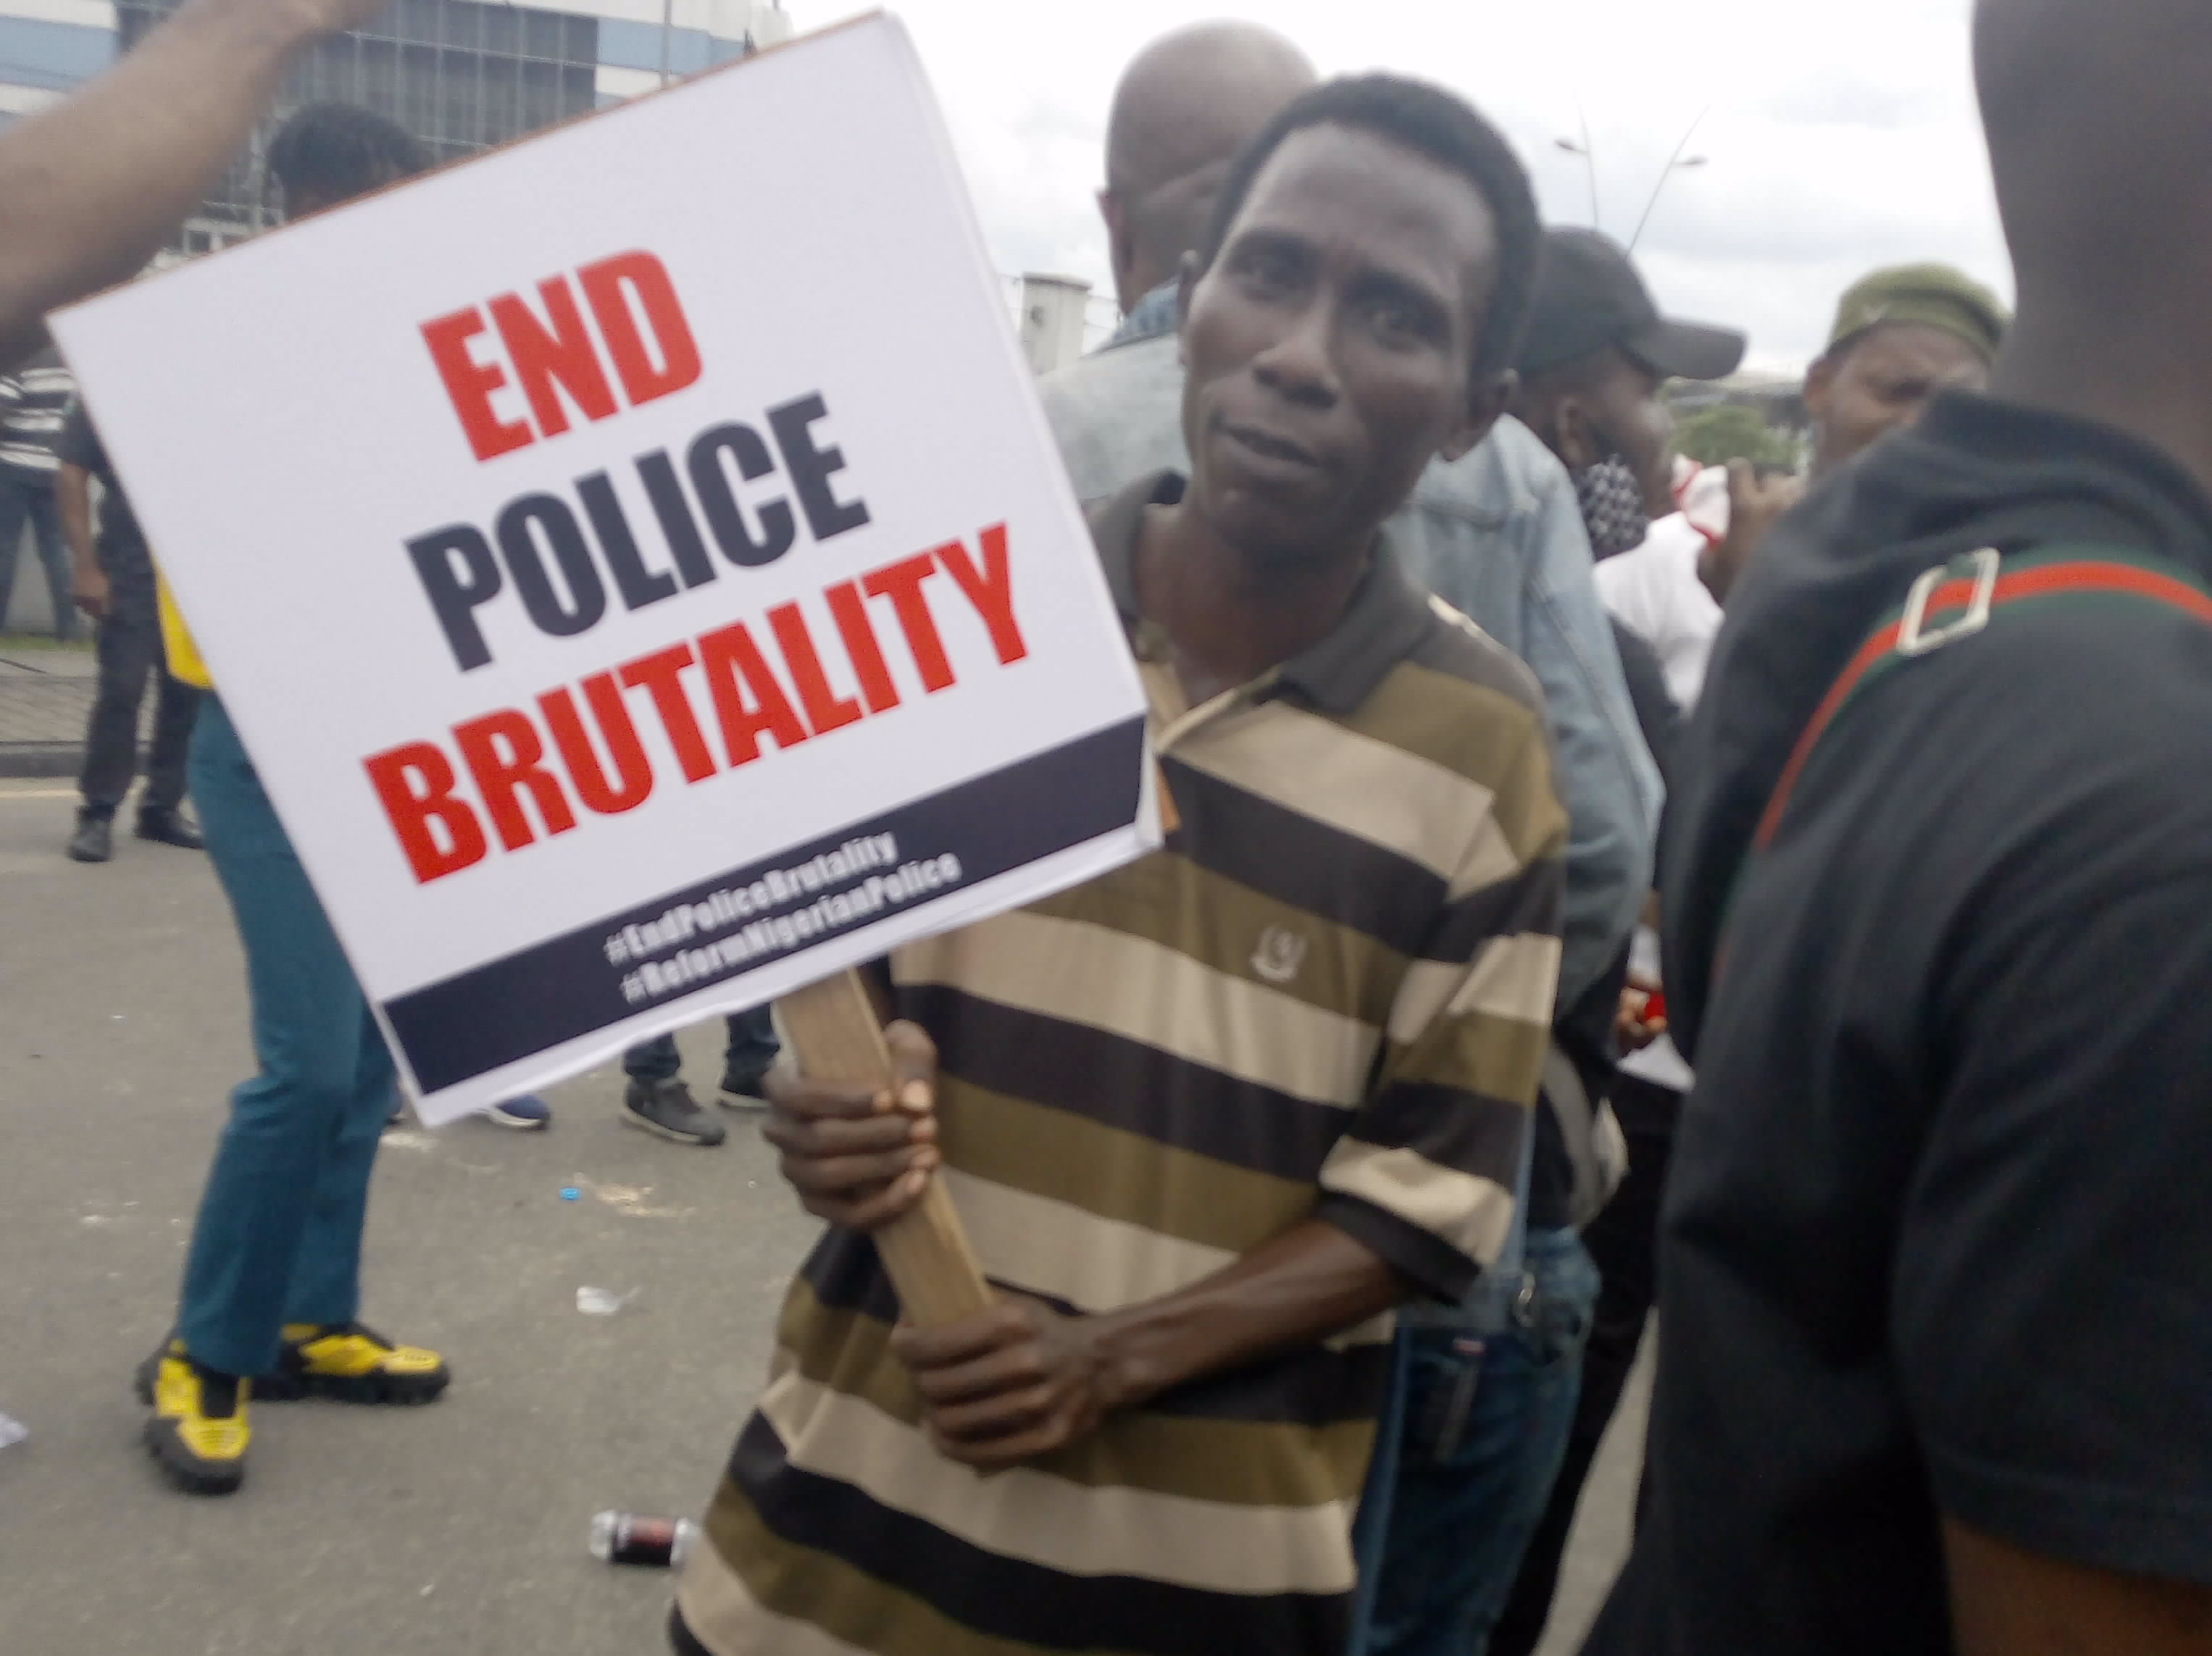 END POLICE BRUTALITY